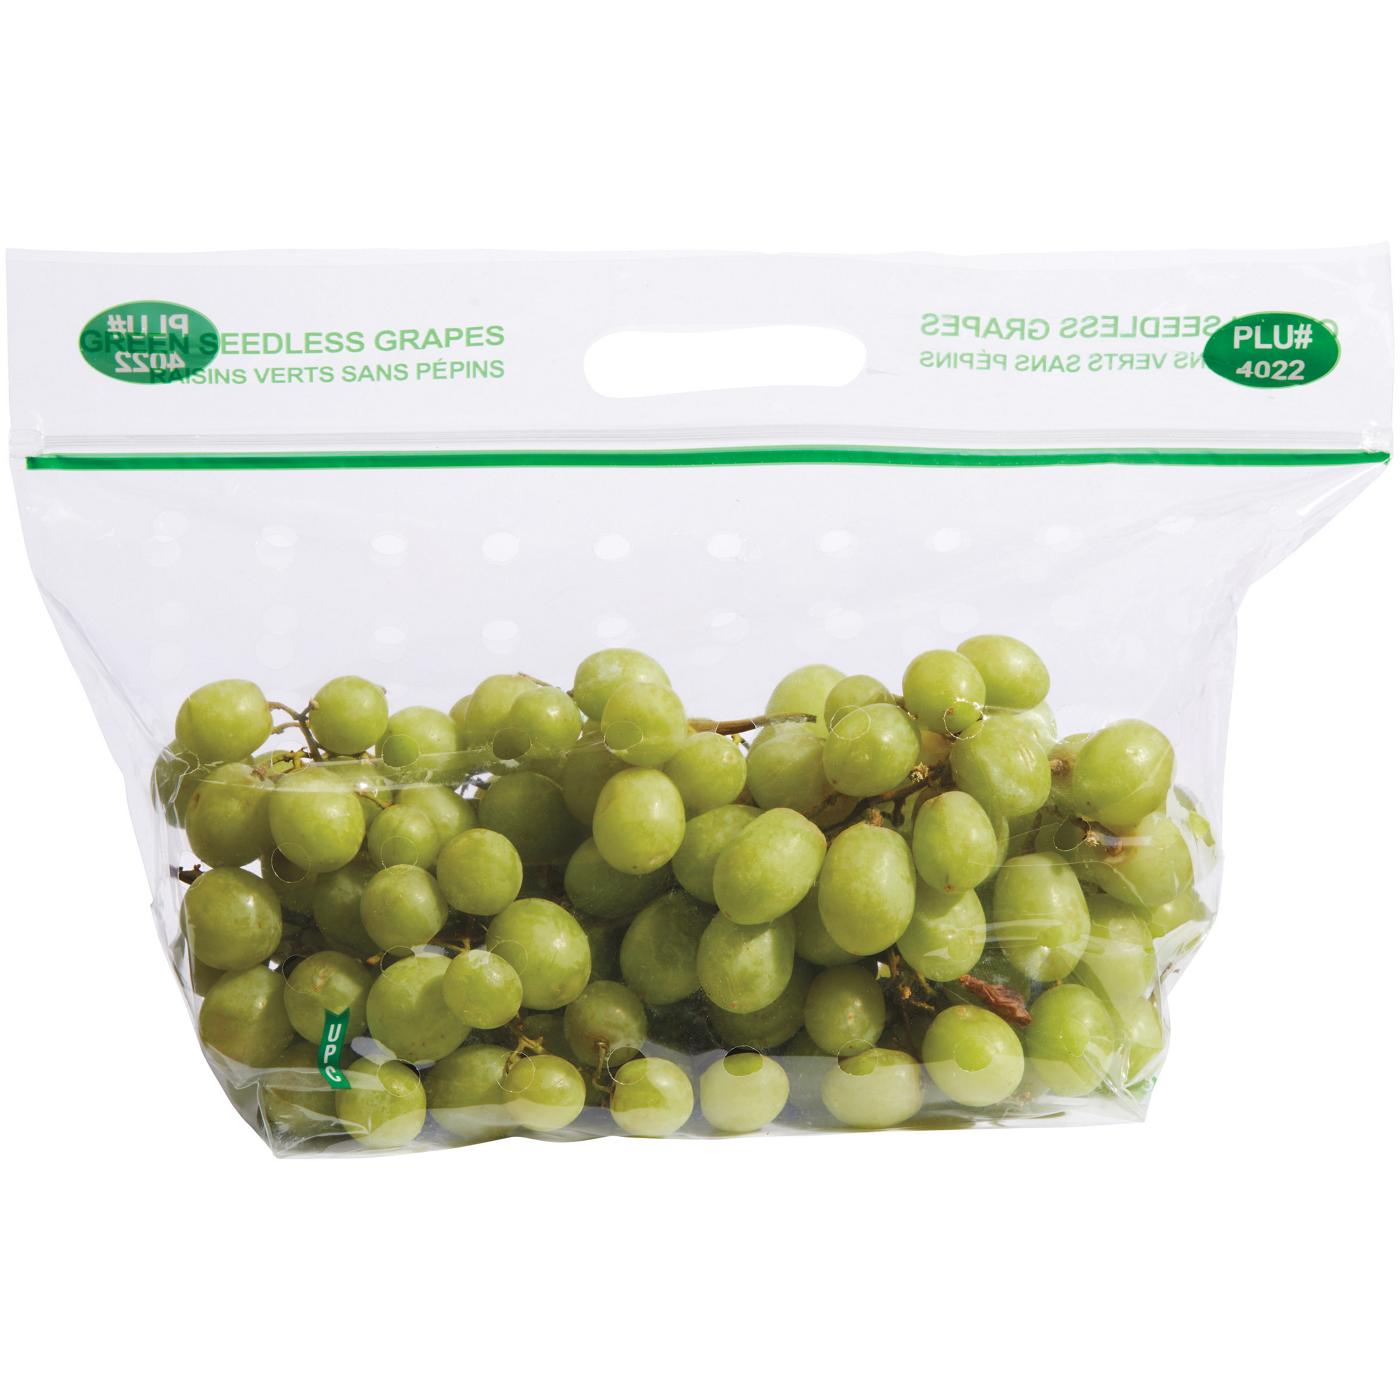 Fresh Seedless White Grapes; image 1 of 2